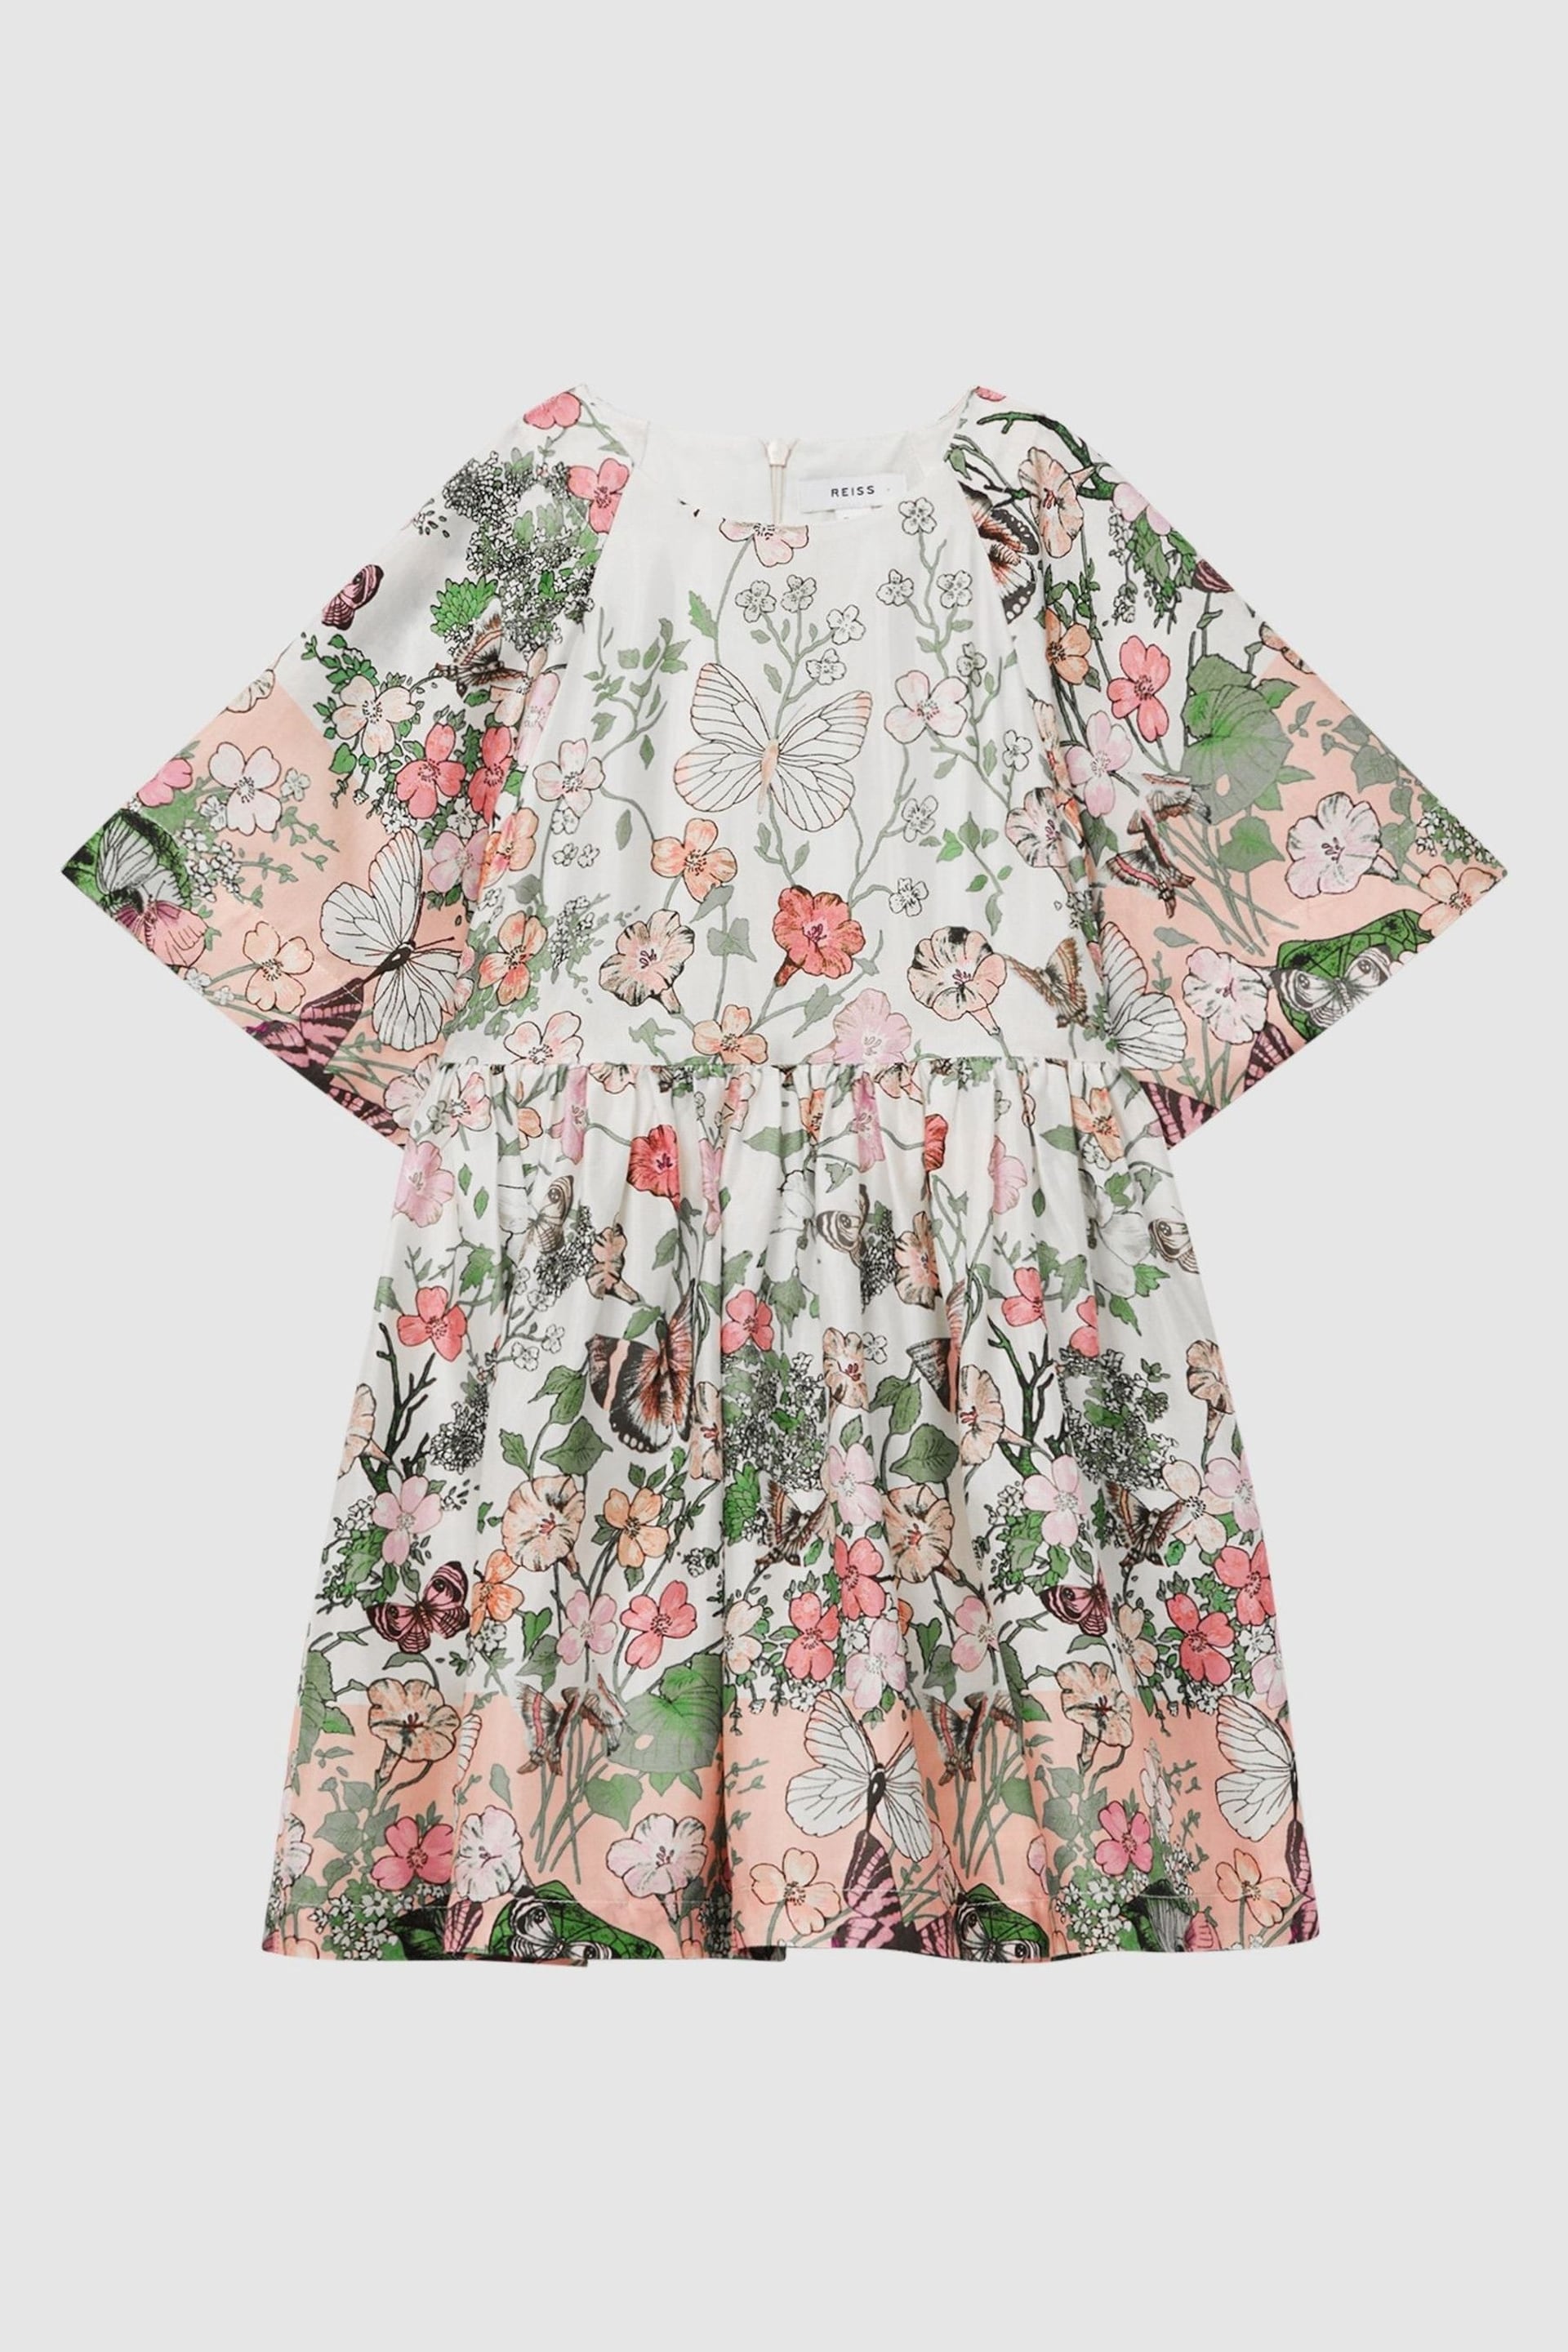 Reiss Ivory Print Marnie Senior Floral Print Bell Sleeve Dress - Image 2 of 7